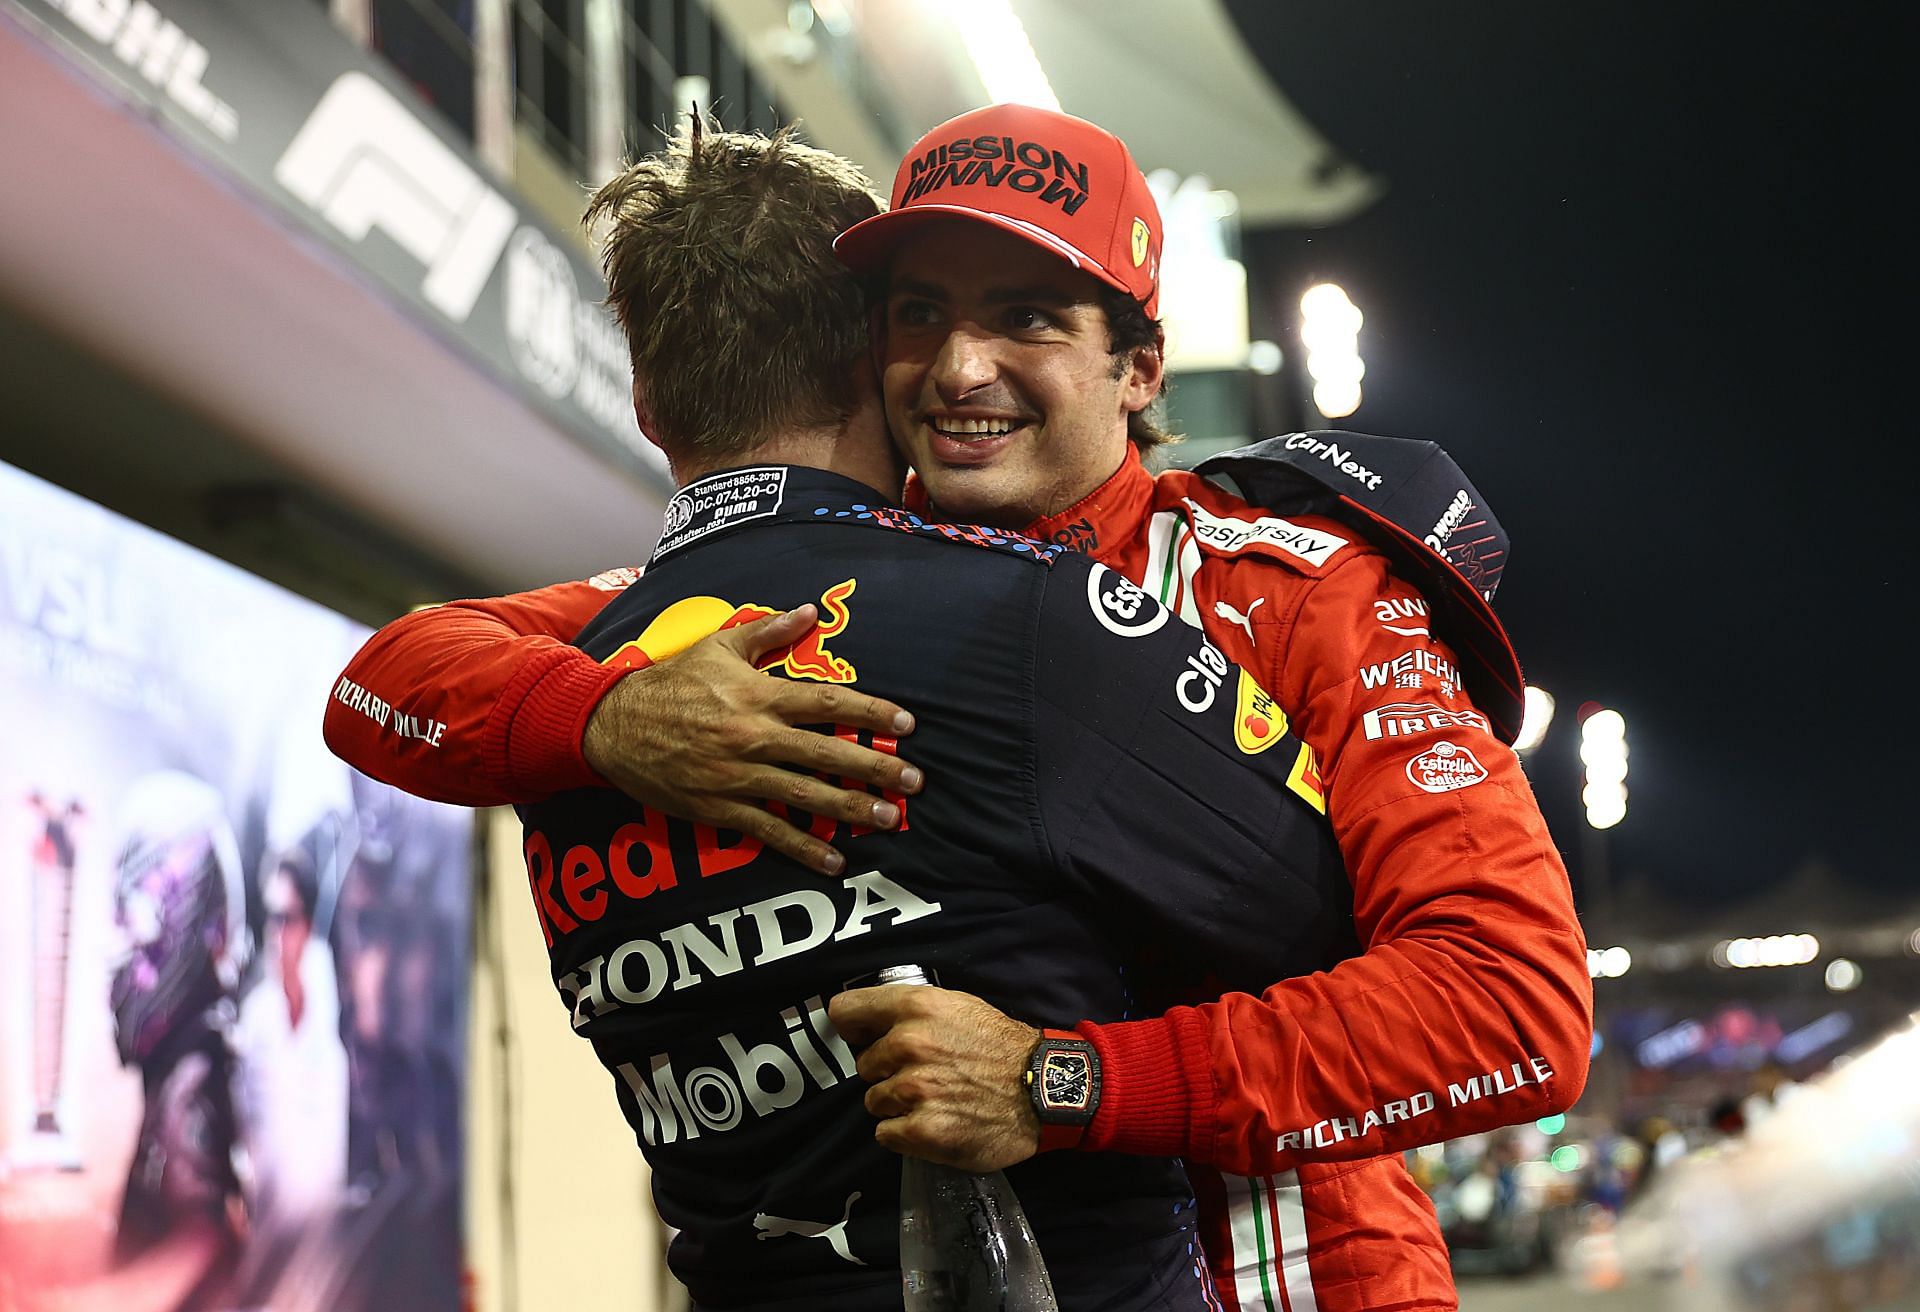 F1 Grand Prix of Abu Dhabi - Carlos Sainz Jr. embraces Max Verstappen